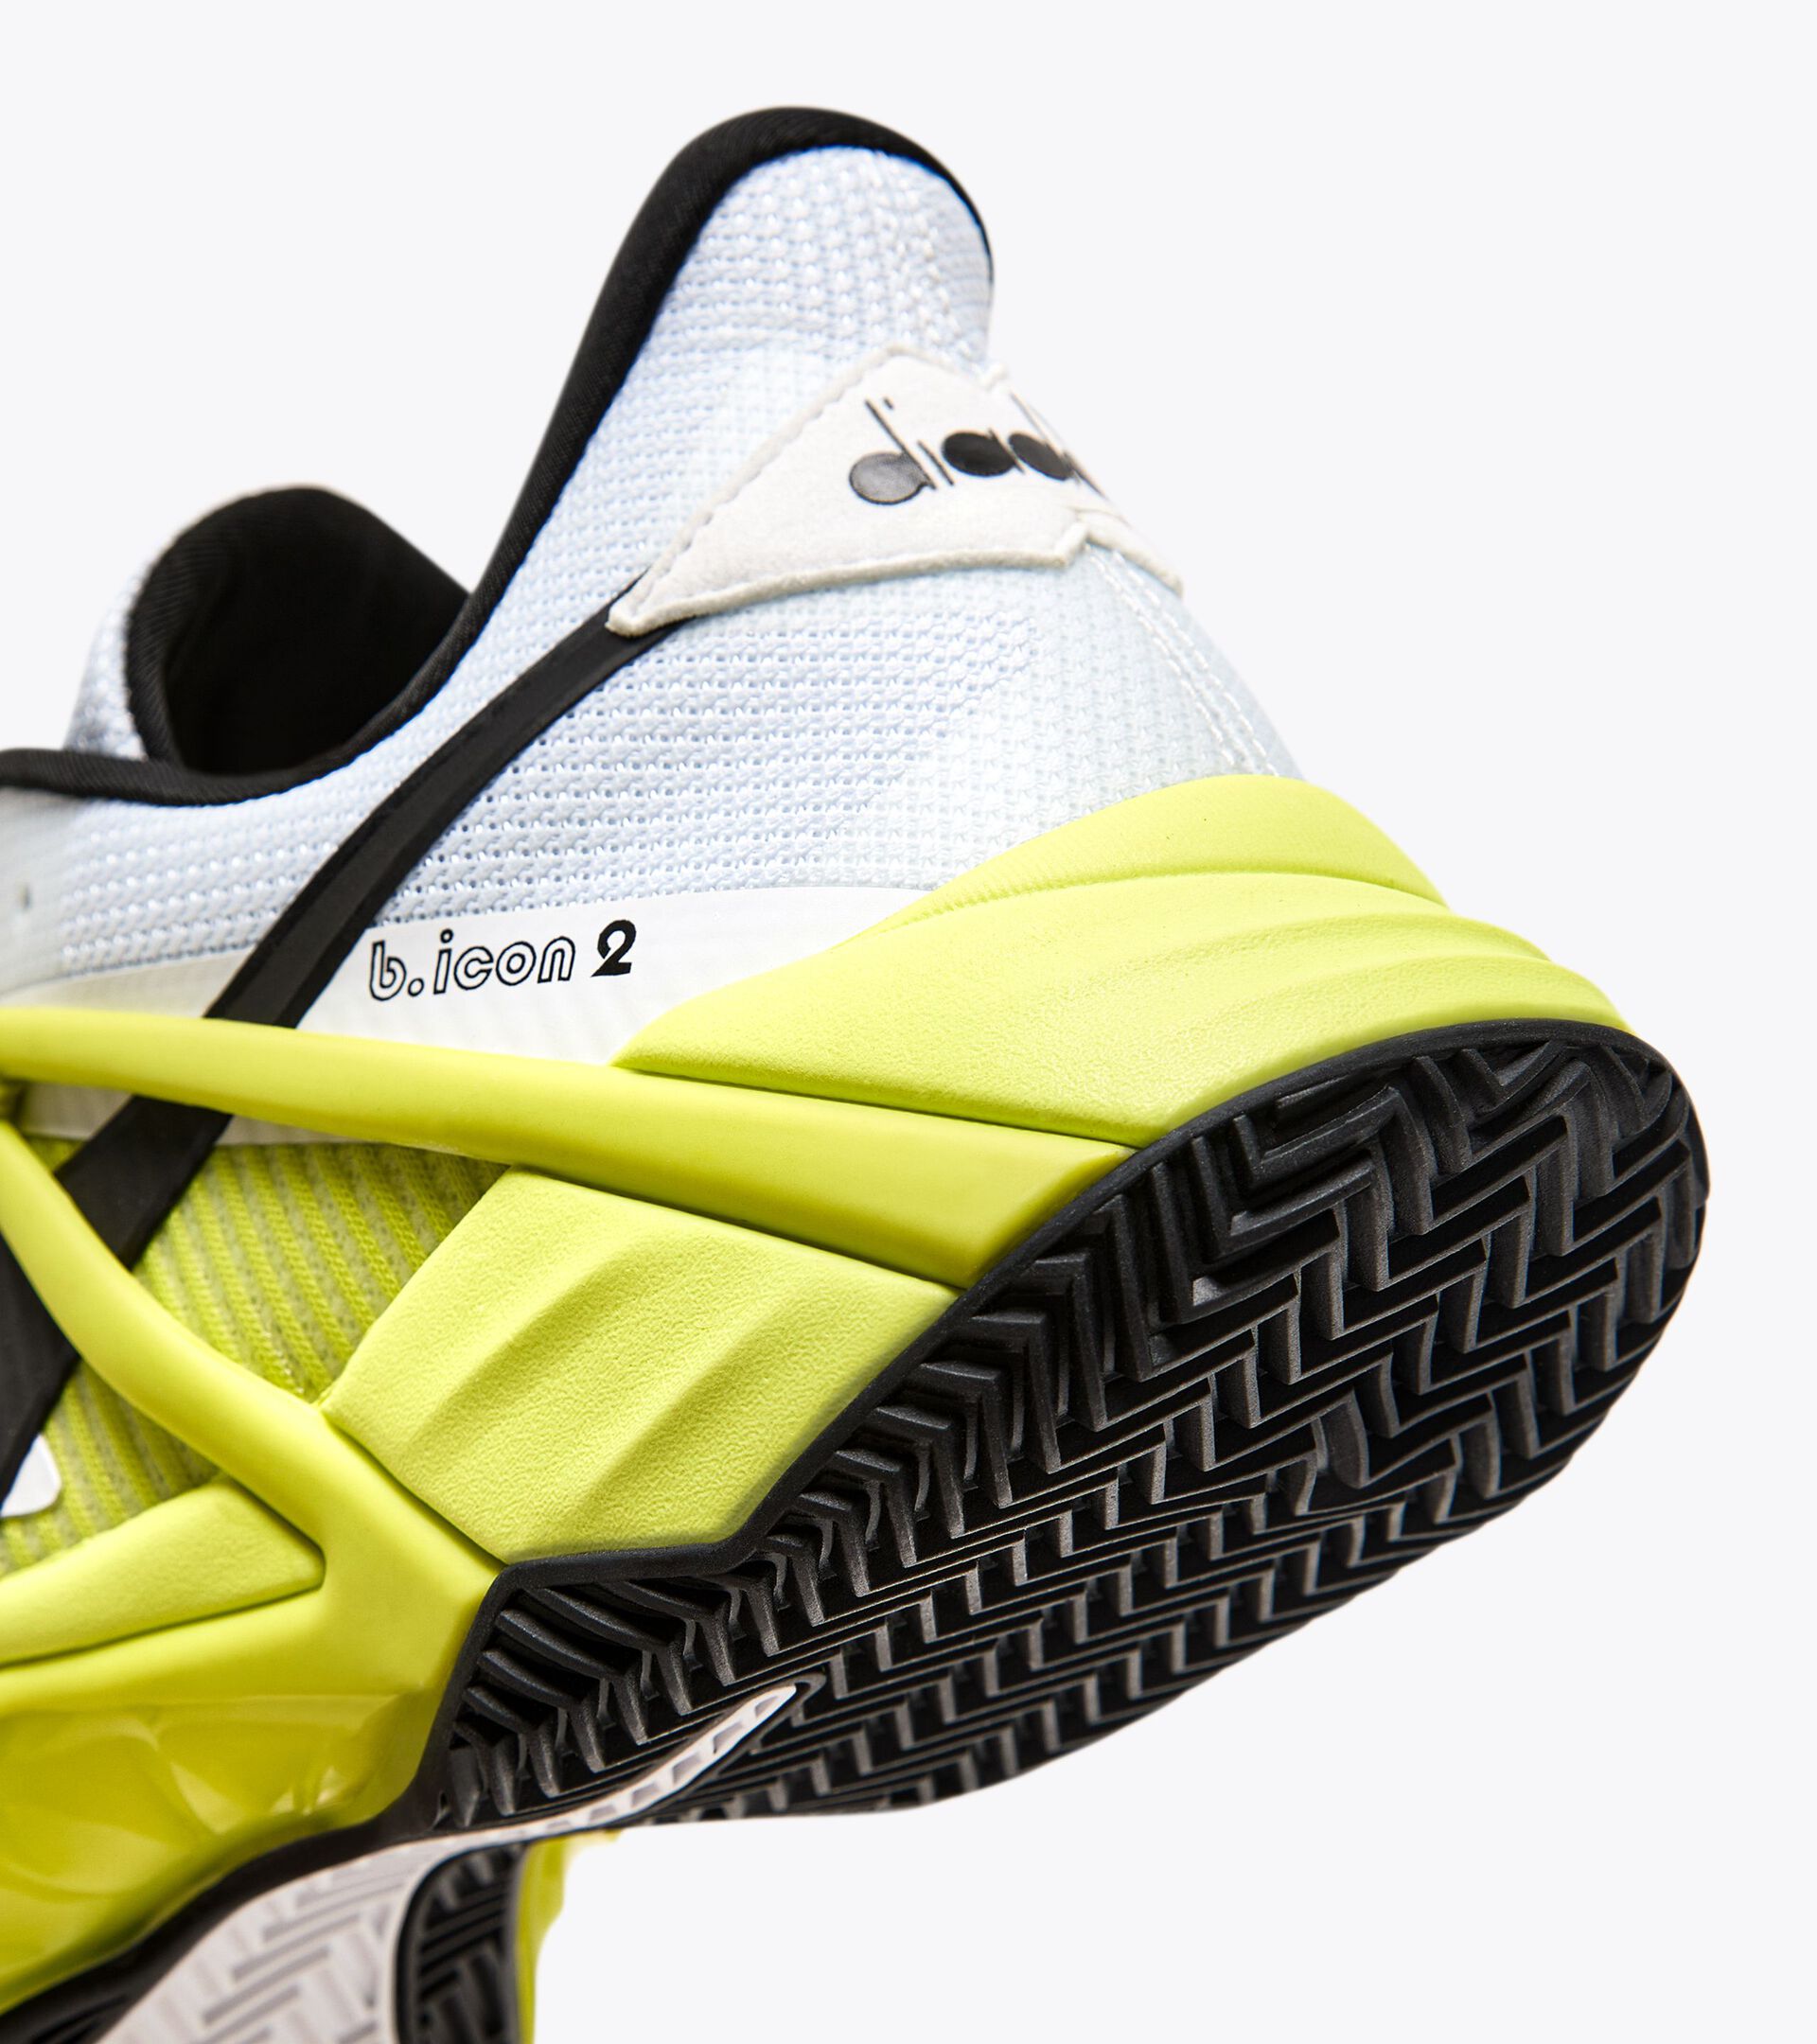 Tennis shoes for clay courts - Women B.ICON 2 CLAY WHITE/BLACK/EVENING PRIMROSE - Diadora